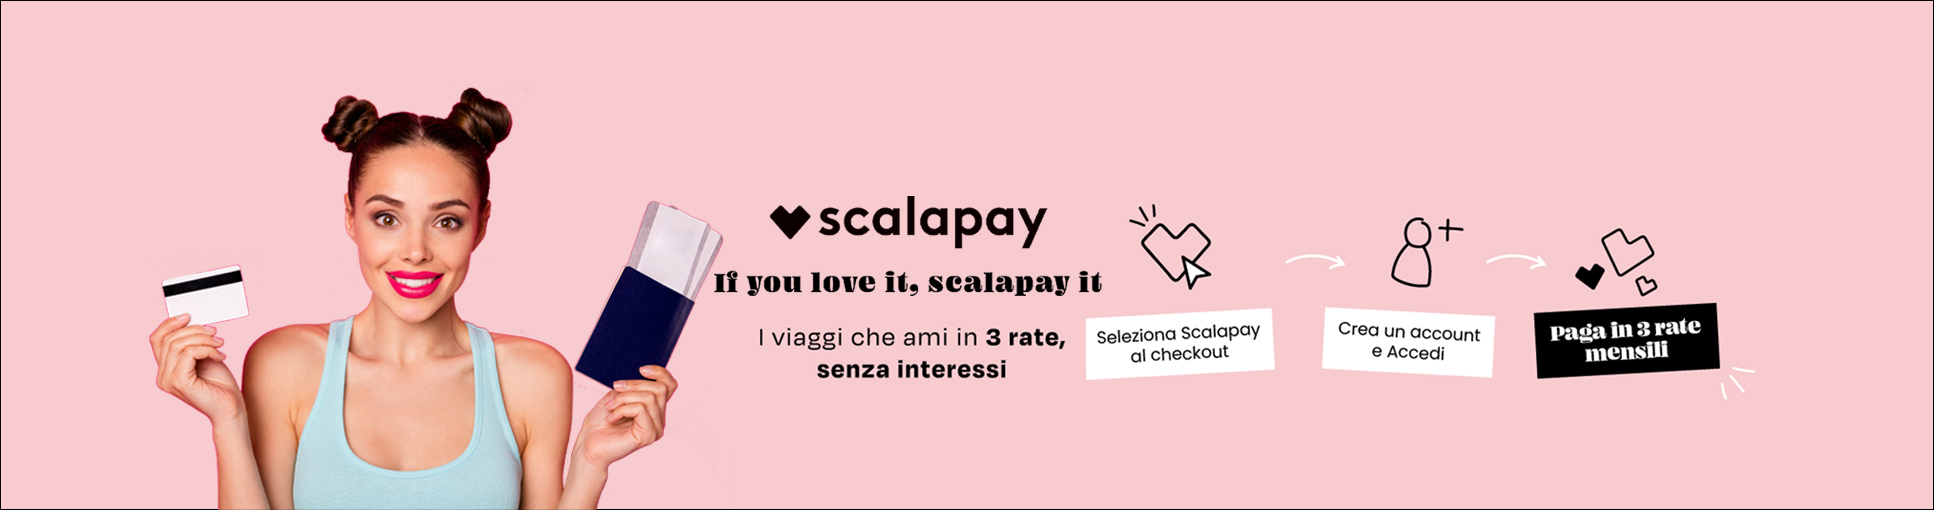 Go4sea-Scalapay-3-rate-senza-interessi